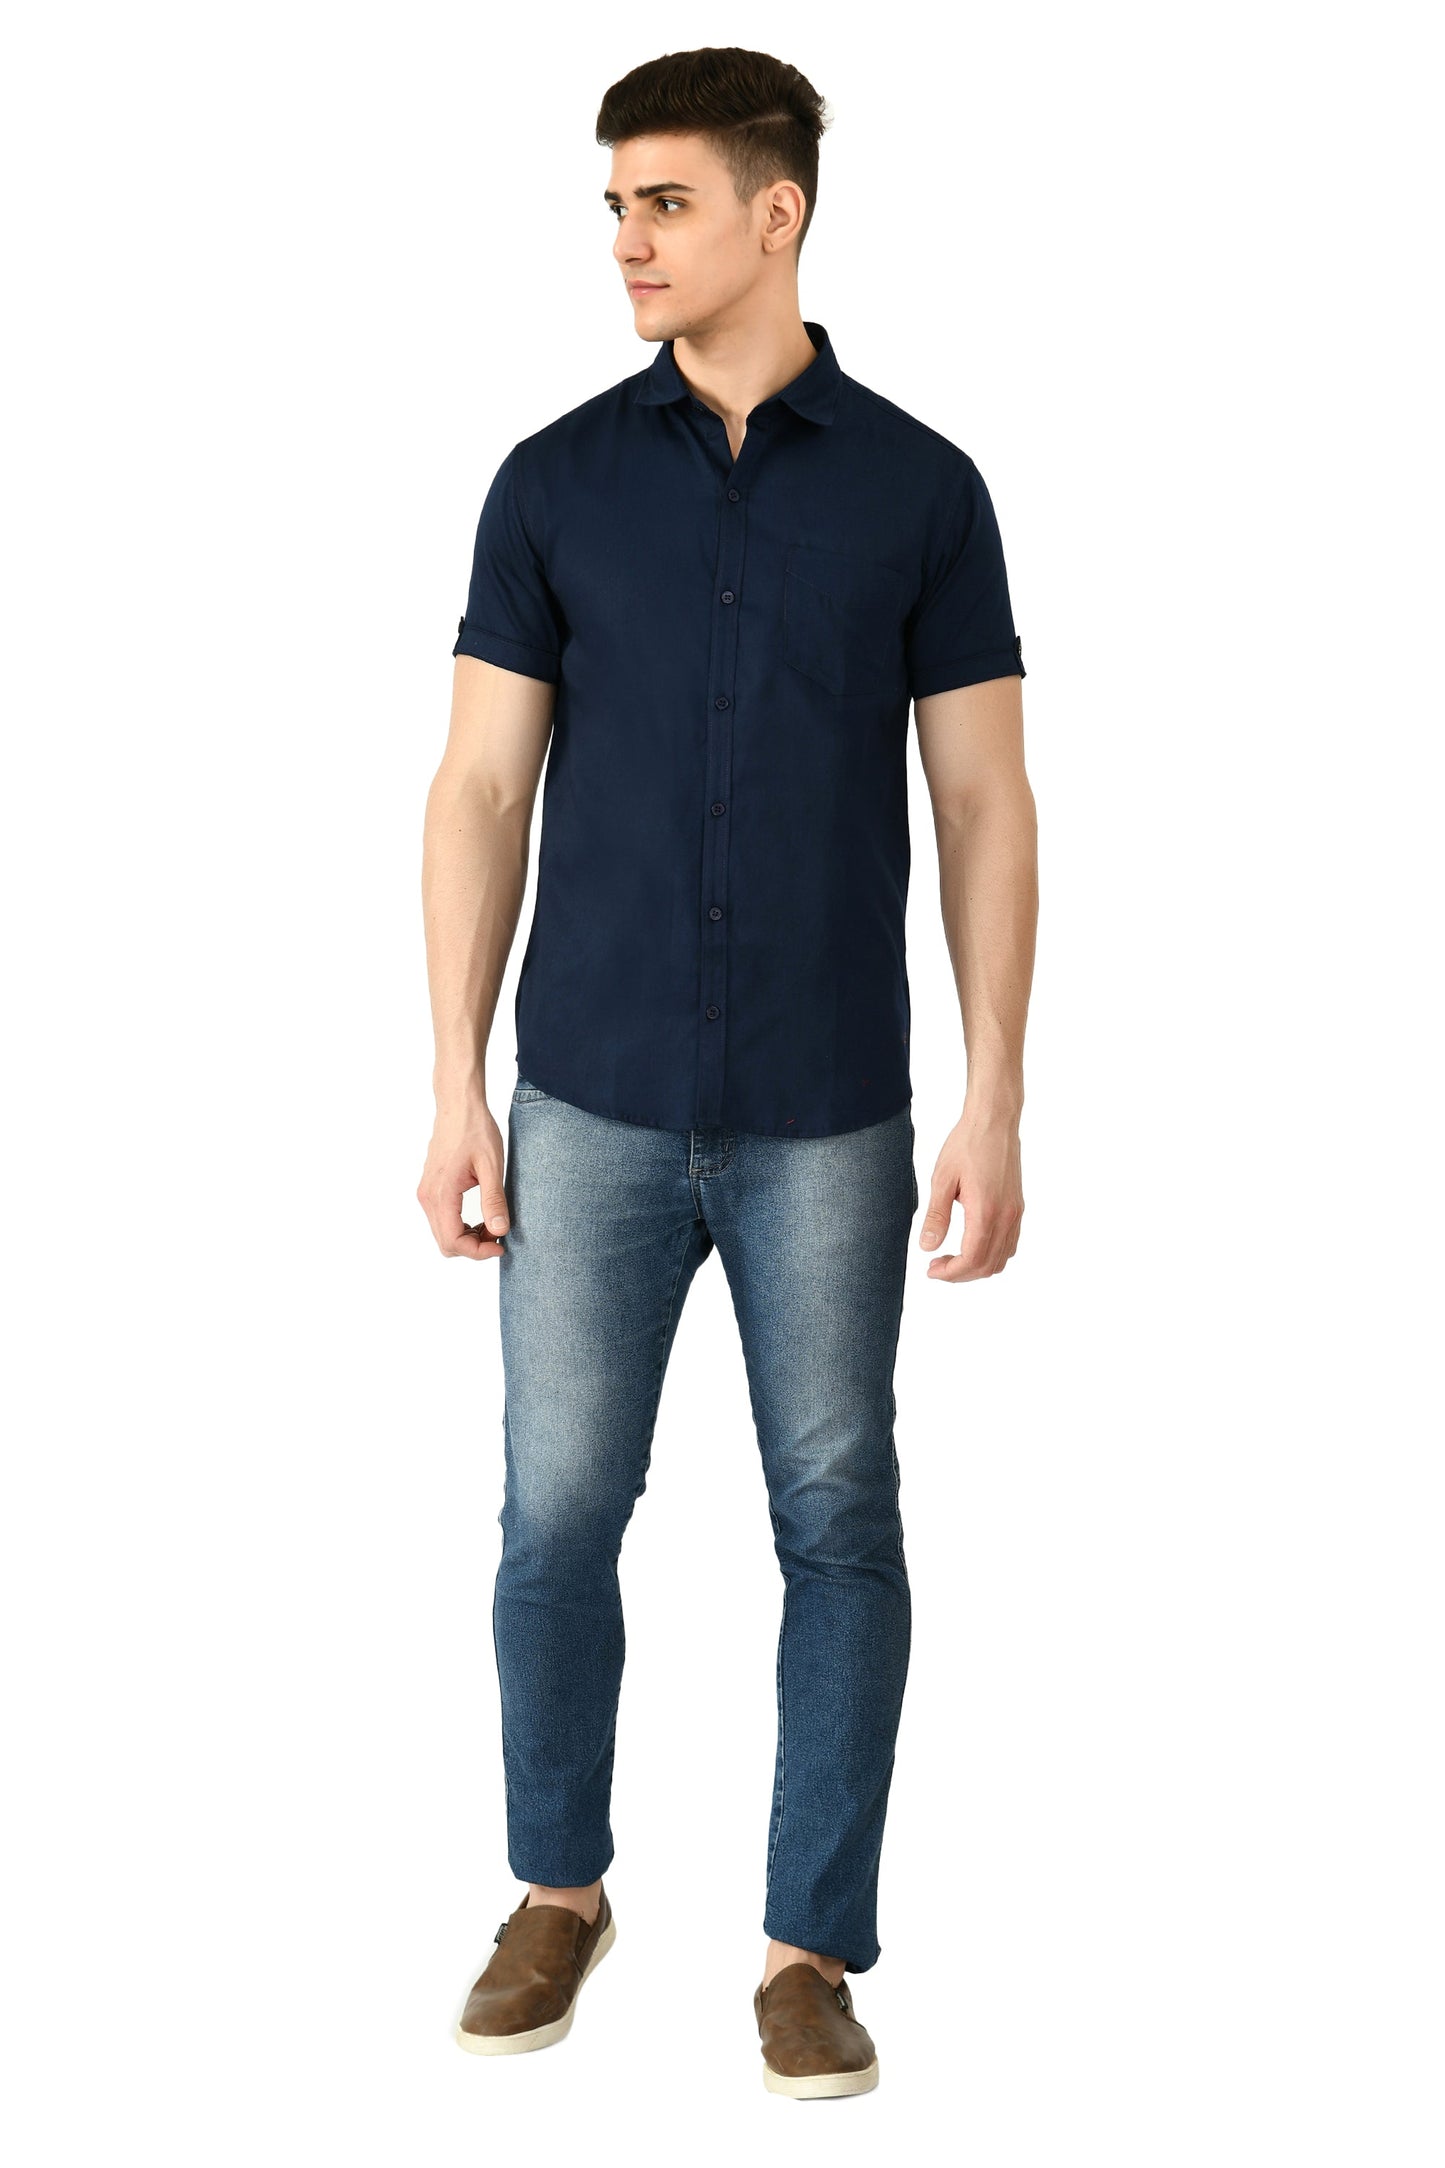 Short Sleeve Cotton Spread Collar Men's Shirt - Navy Blue